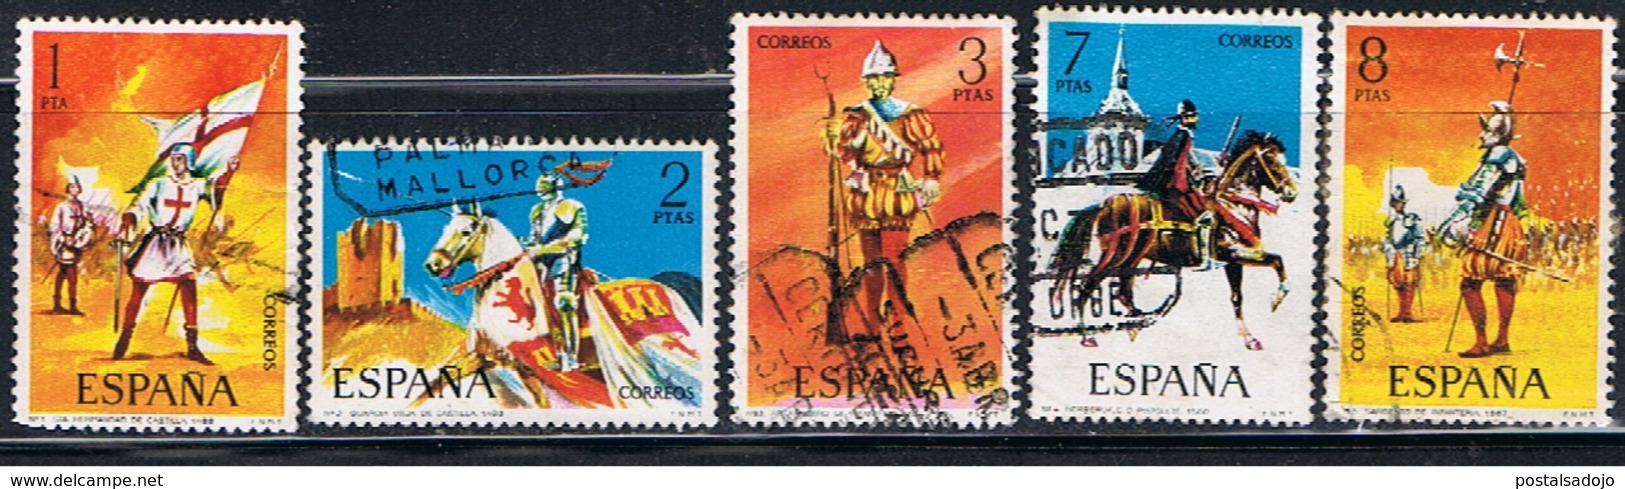 (2E 459) ESPAÑA // YVERT 1793 à 1797  // EDIFIL  2139 à 2143 // 1973 - Oblitérés